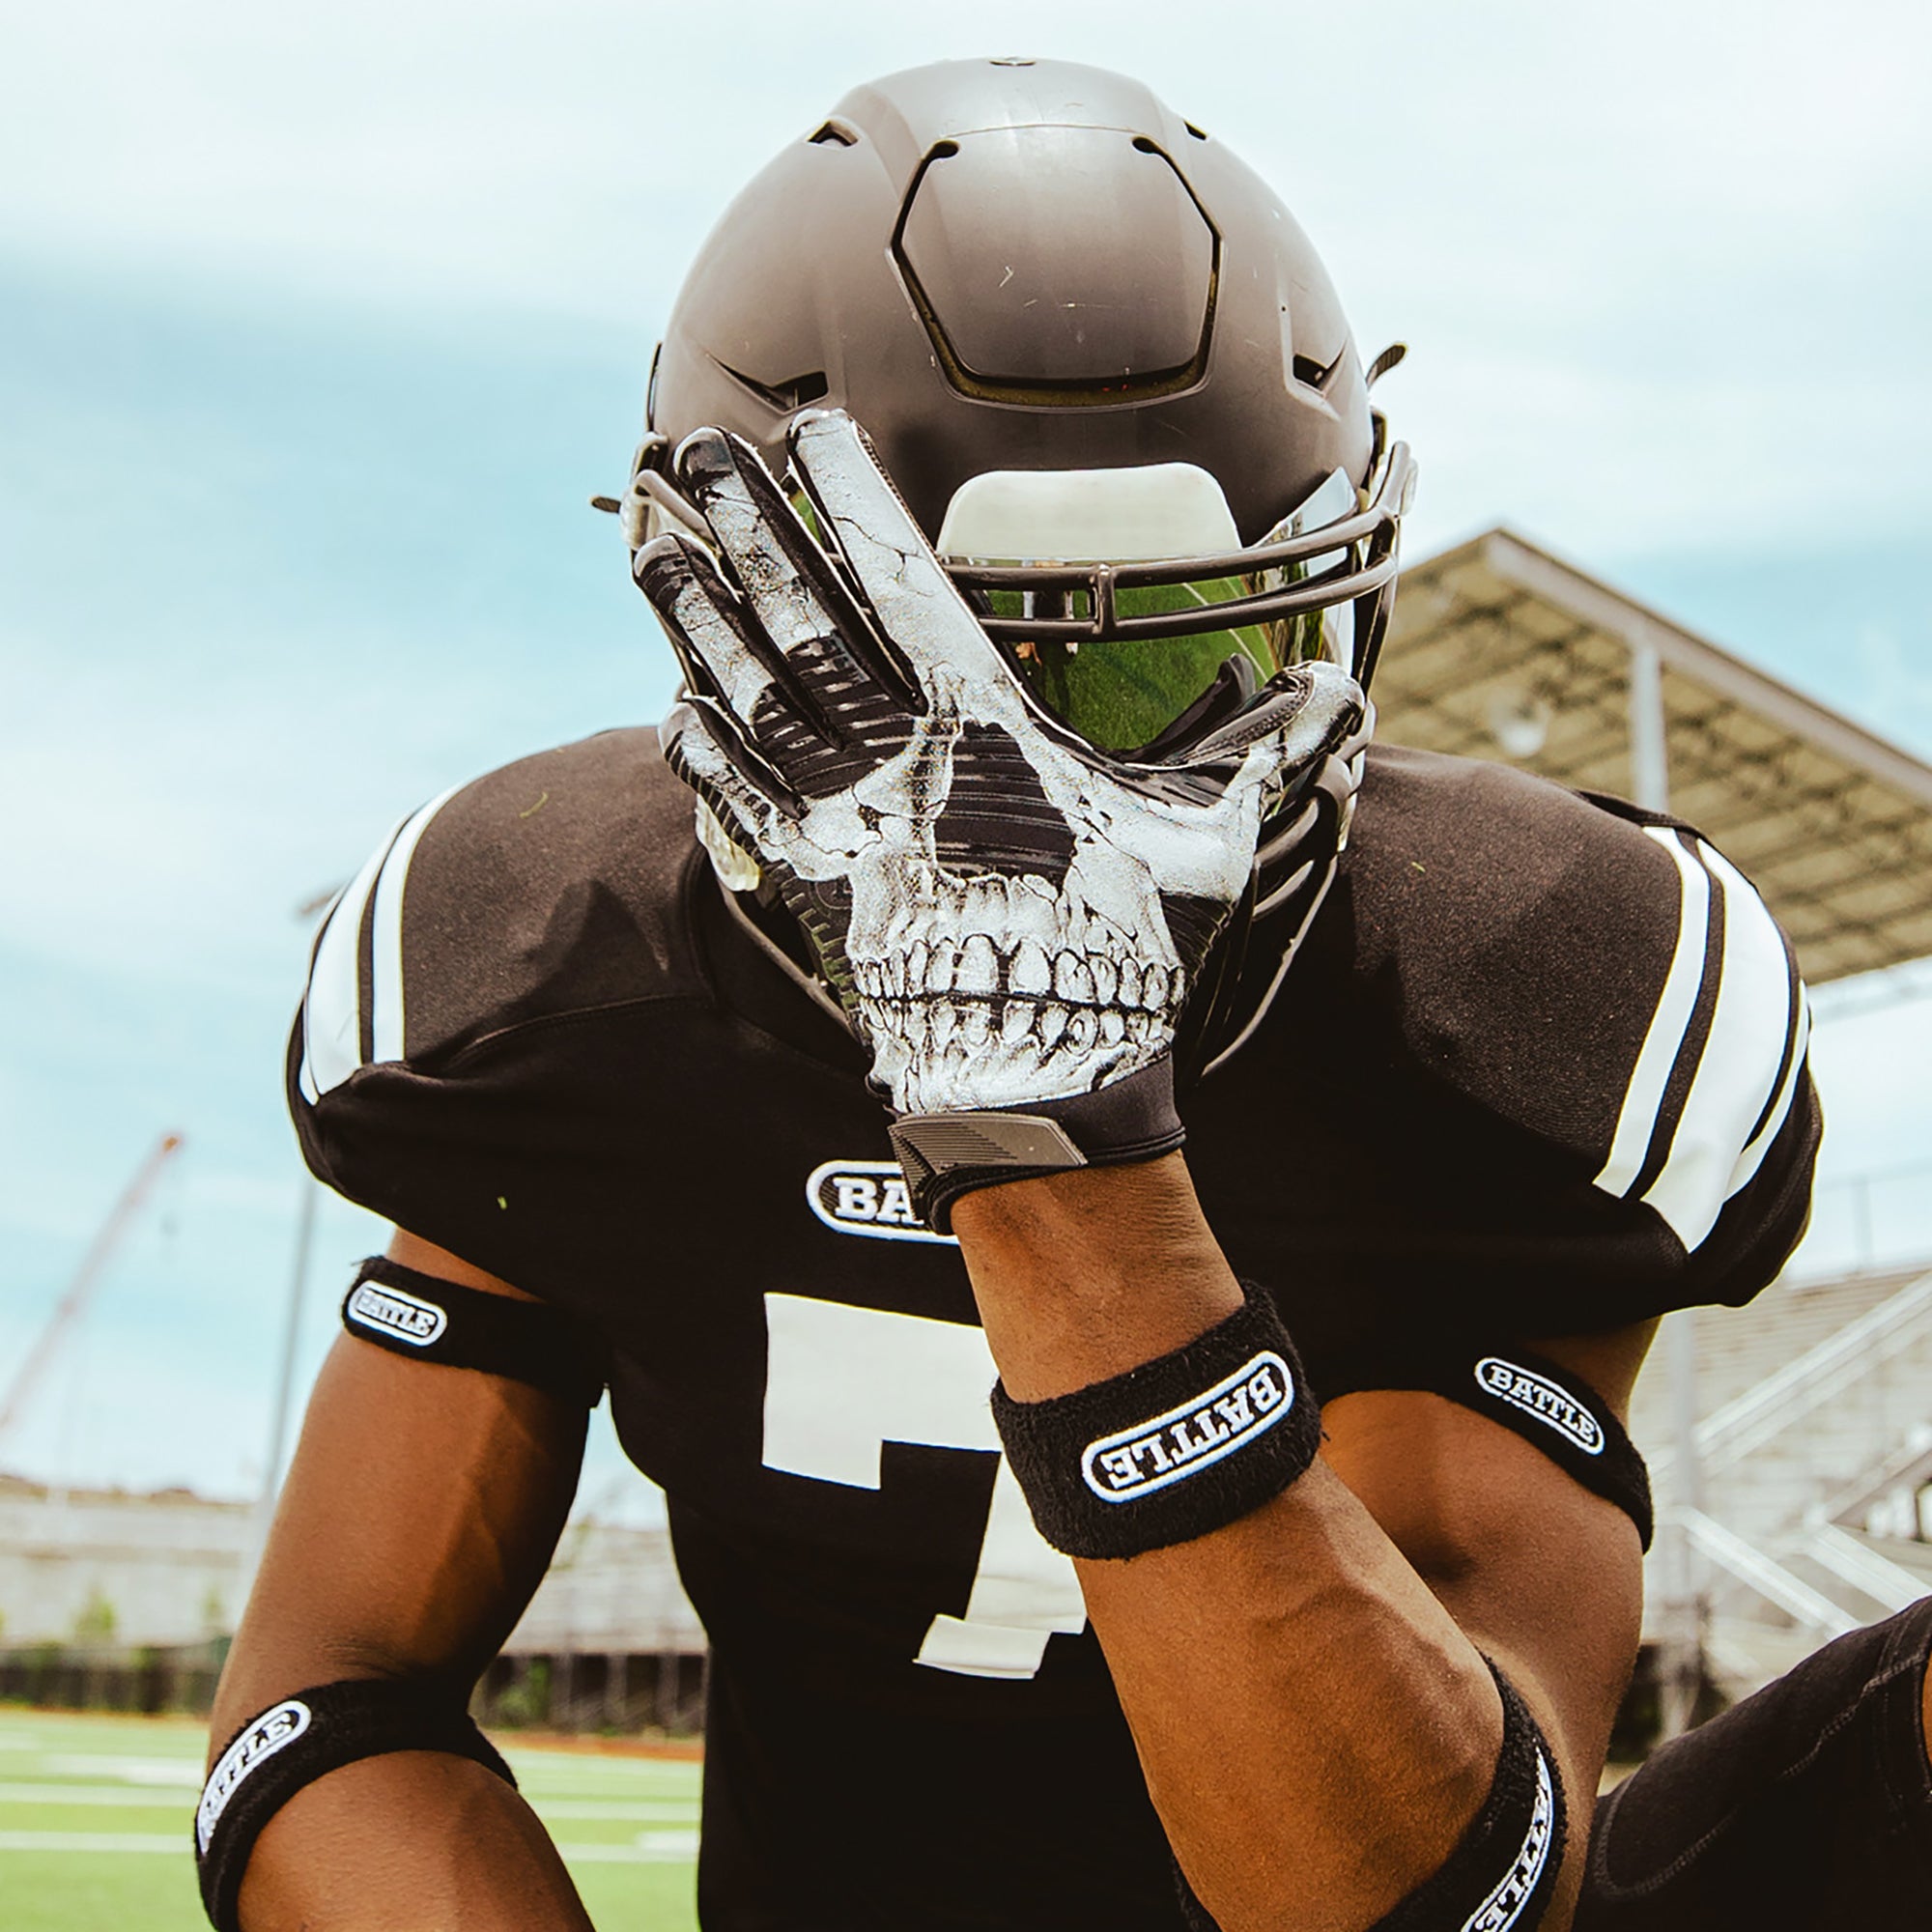 Battle Sports Youth Skullface Doom 1.0 Football Receiver Gloves - Black/White Battle Sports